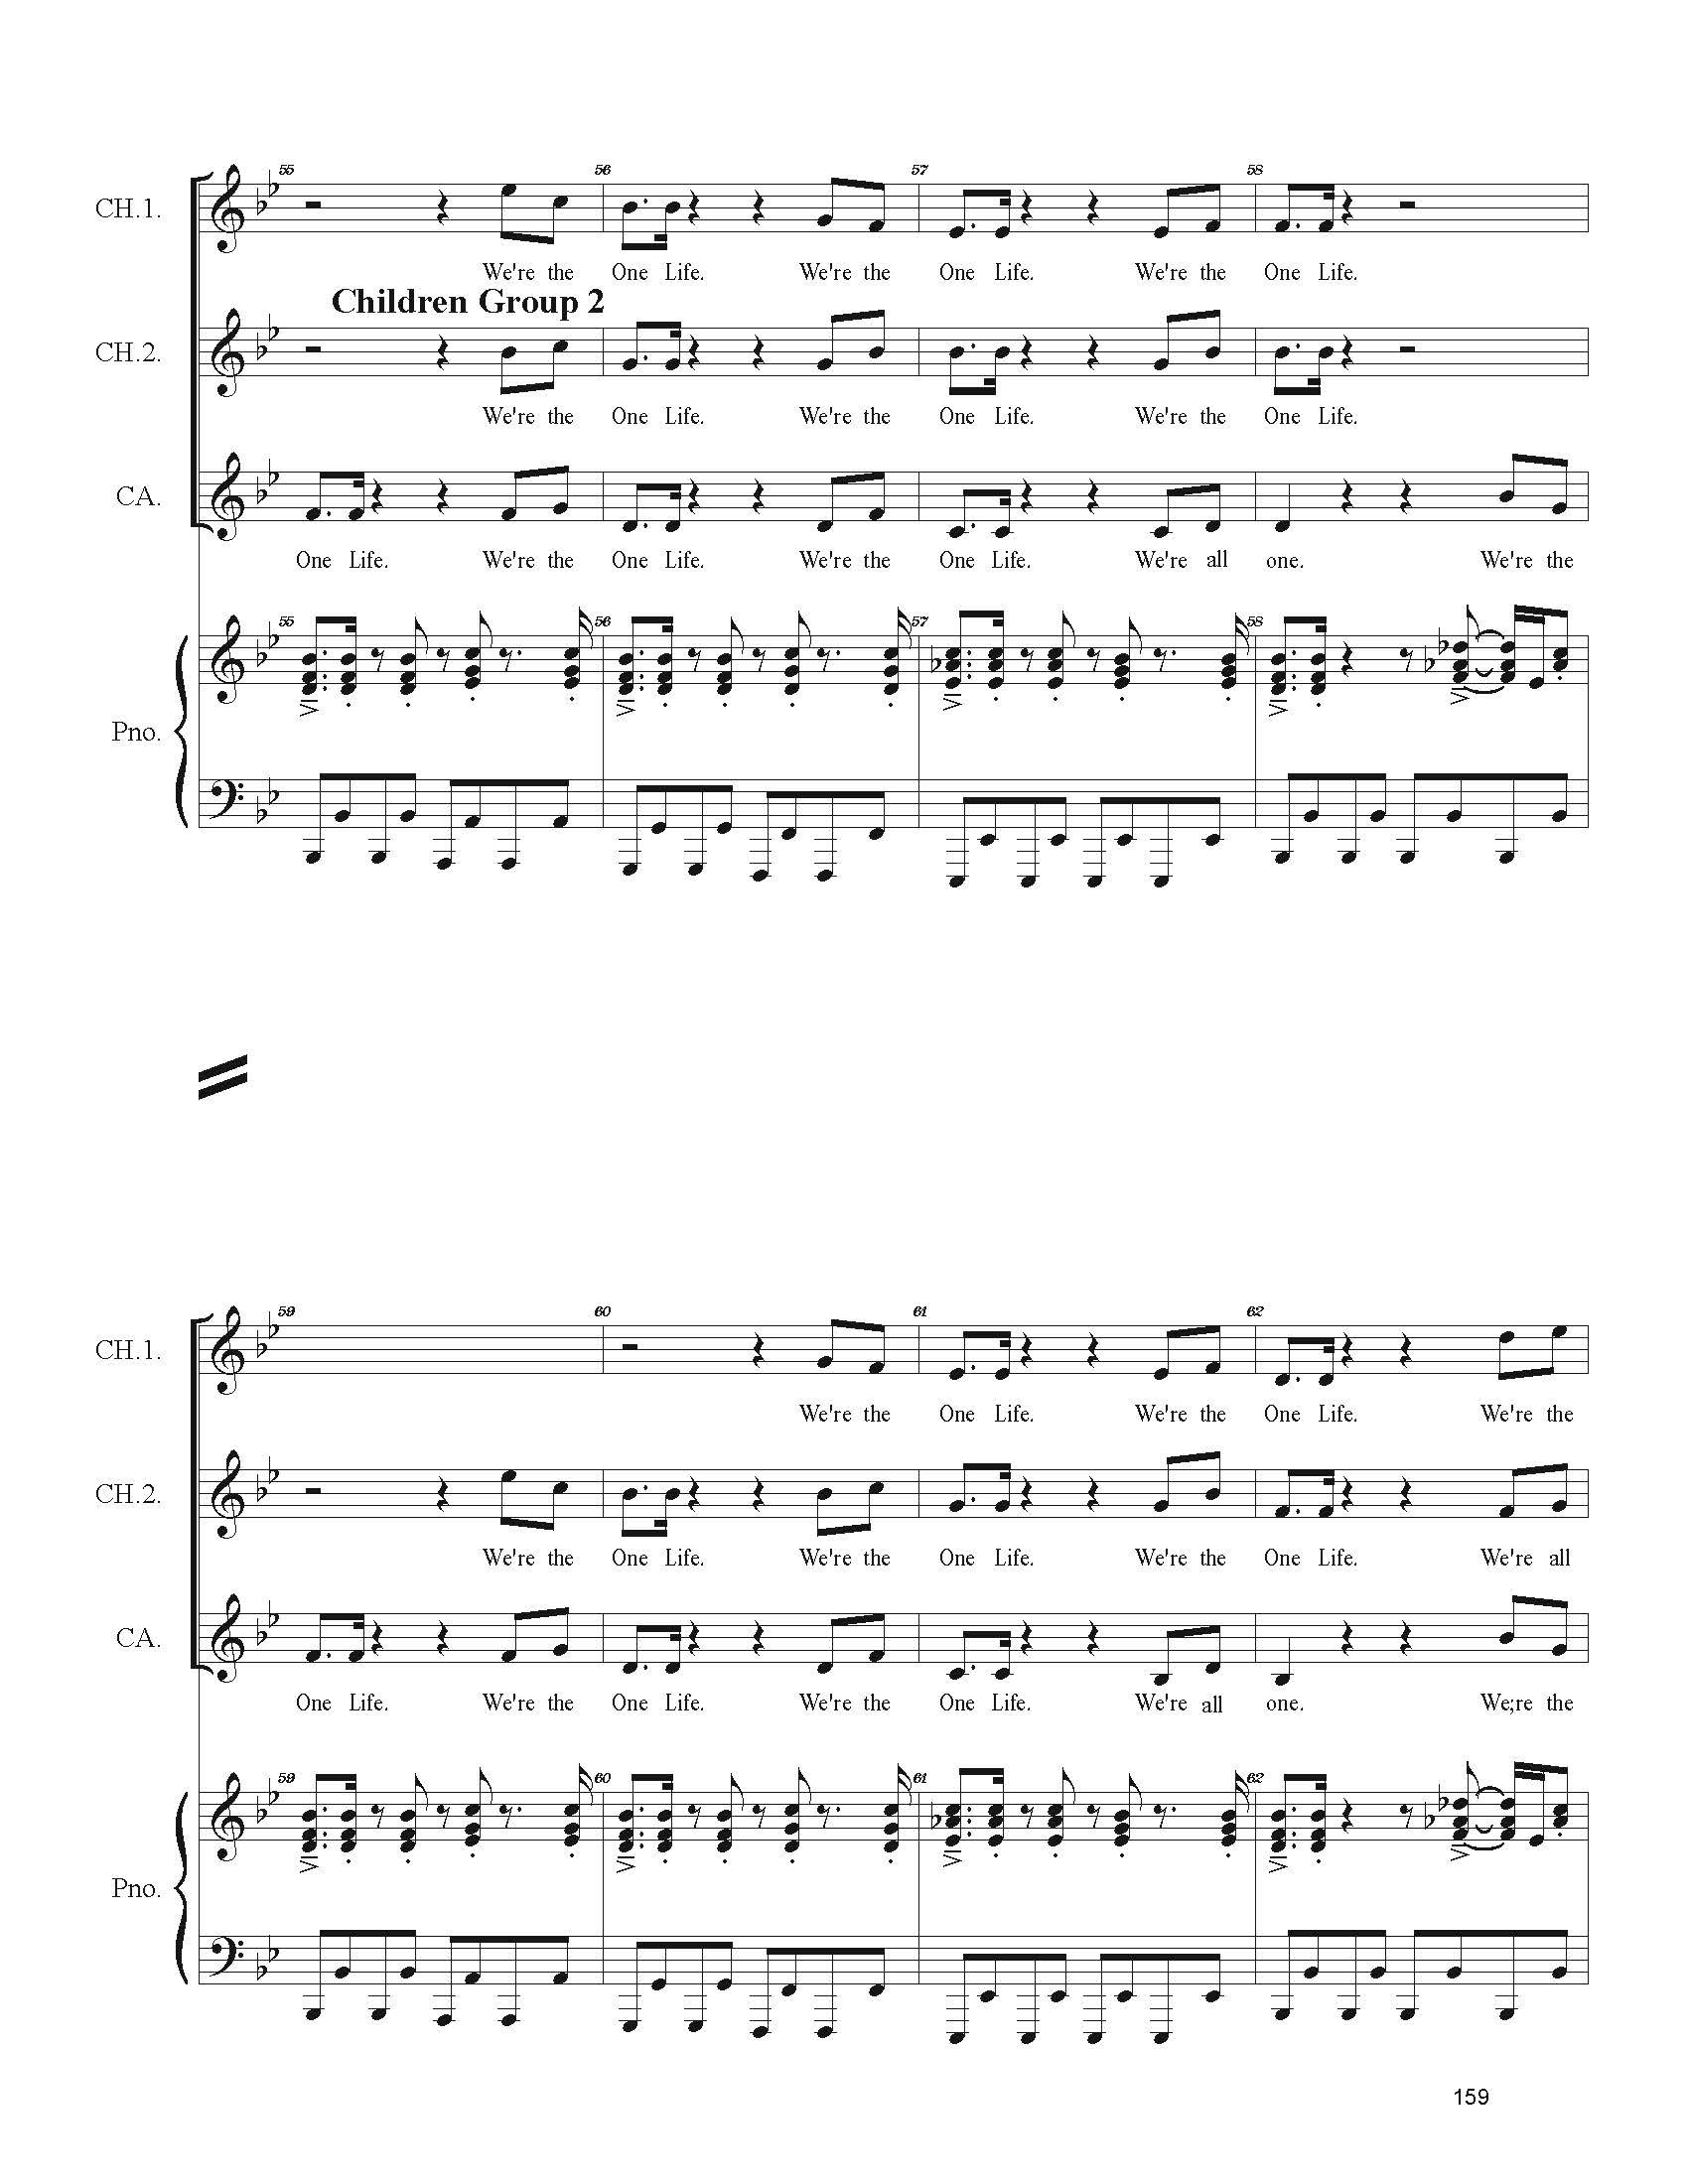 FULL PIANO VOCAL SCORE DRAFT 1 - Score_Page_159.jpg